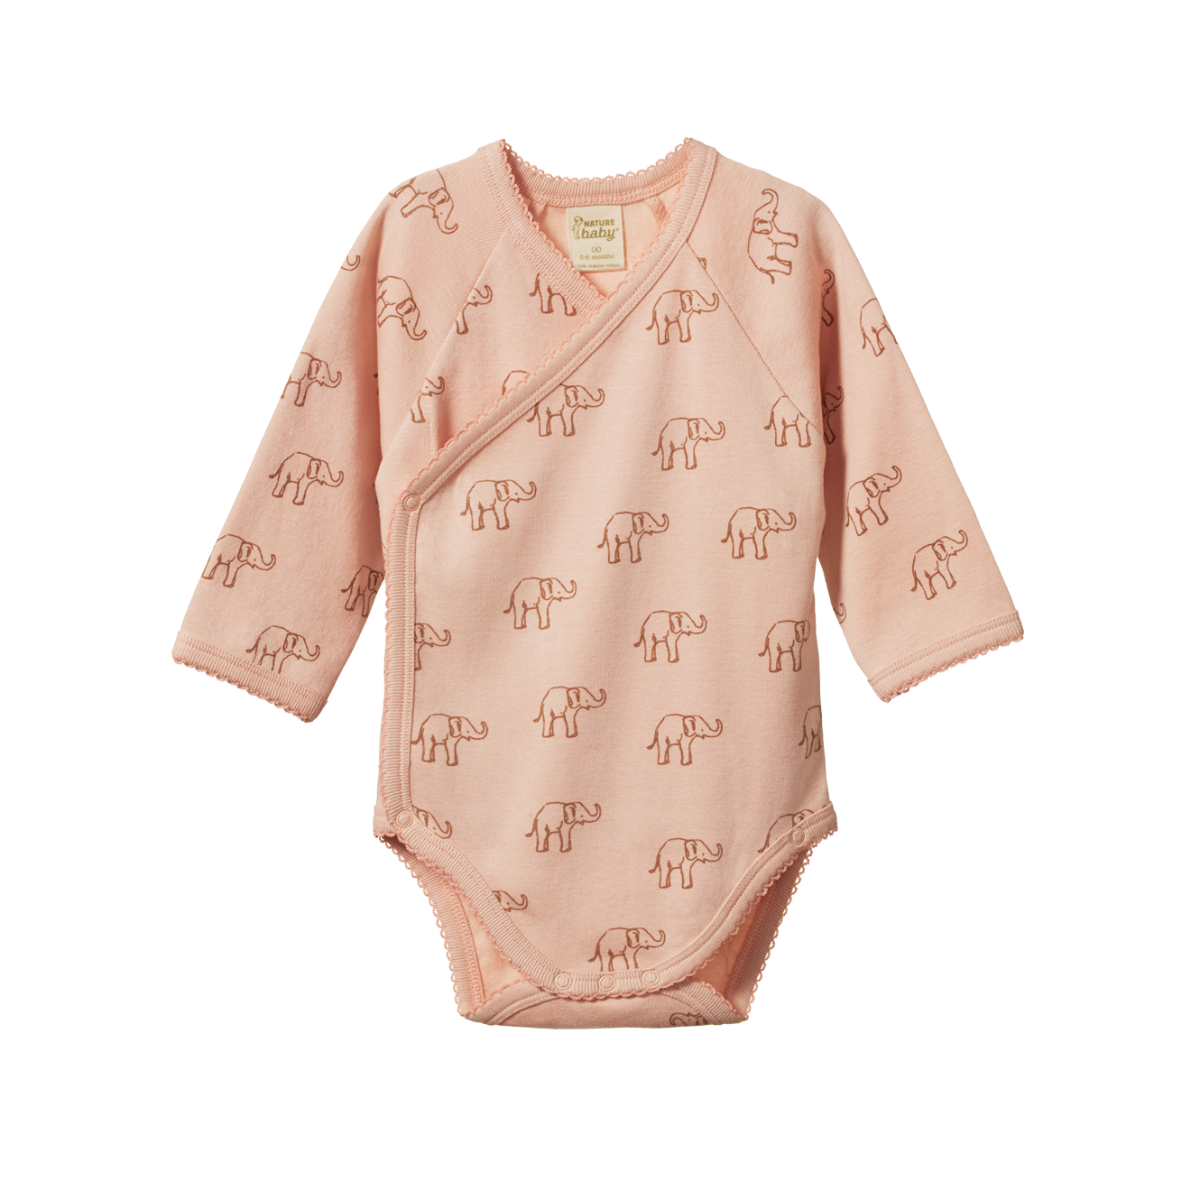 Nature Baby - Kimono body suit l/s Elephant rose dust print